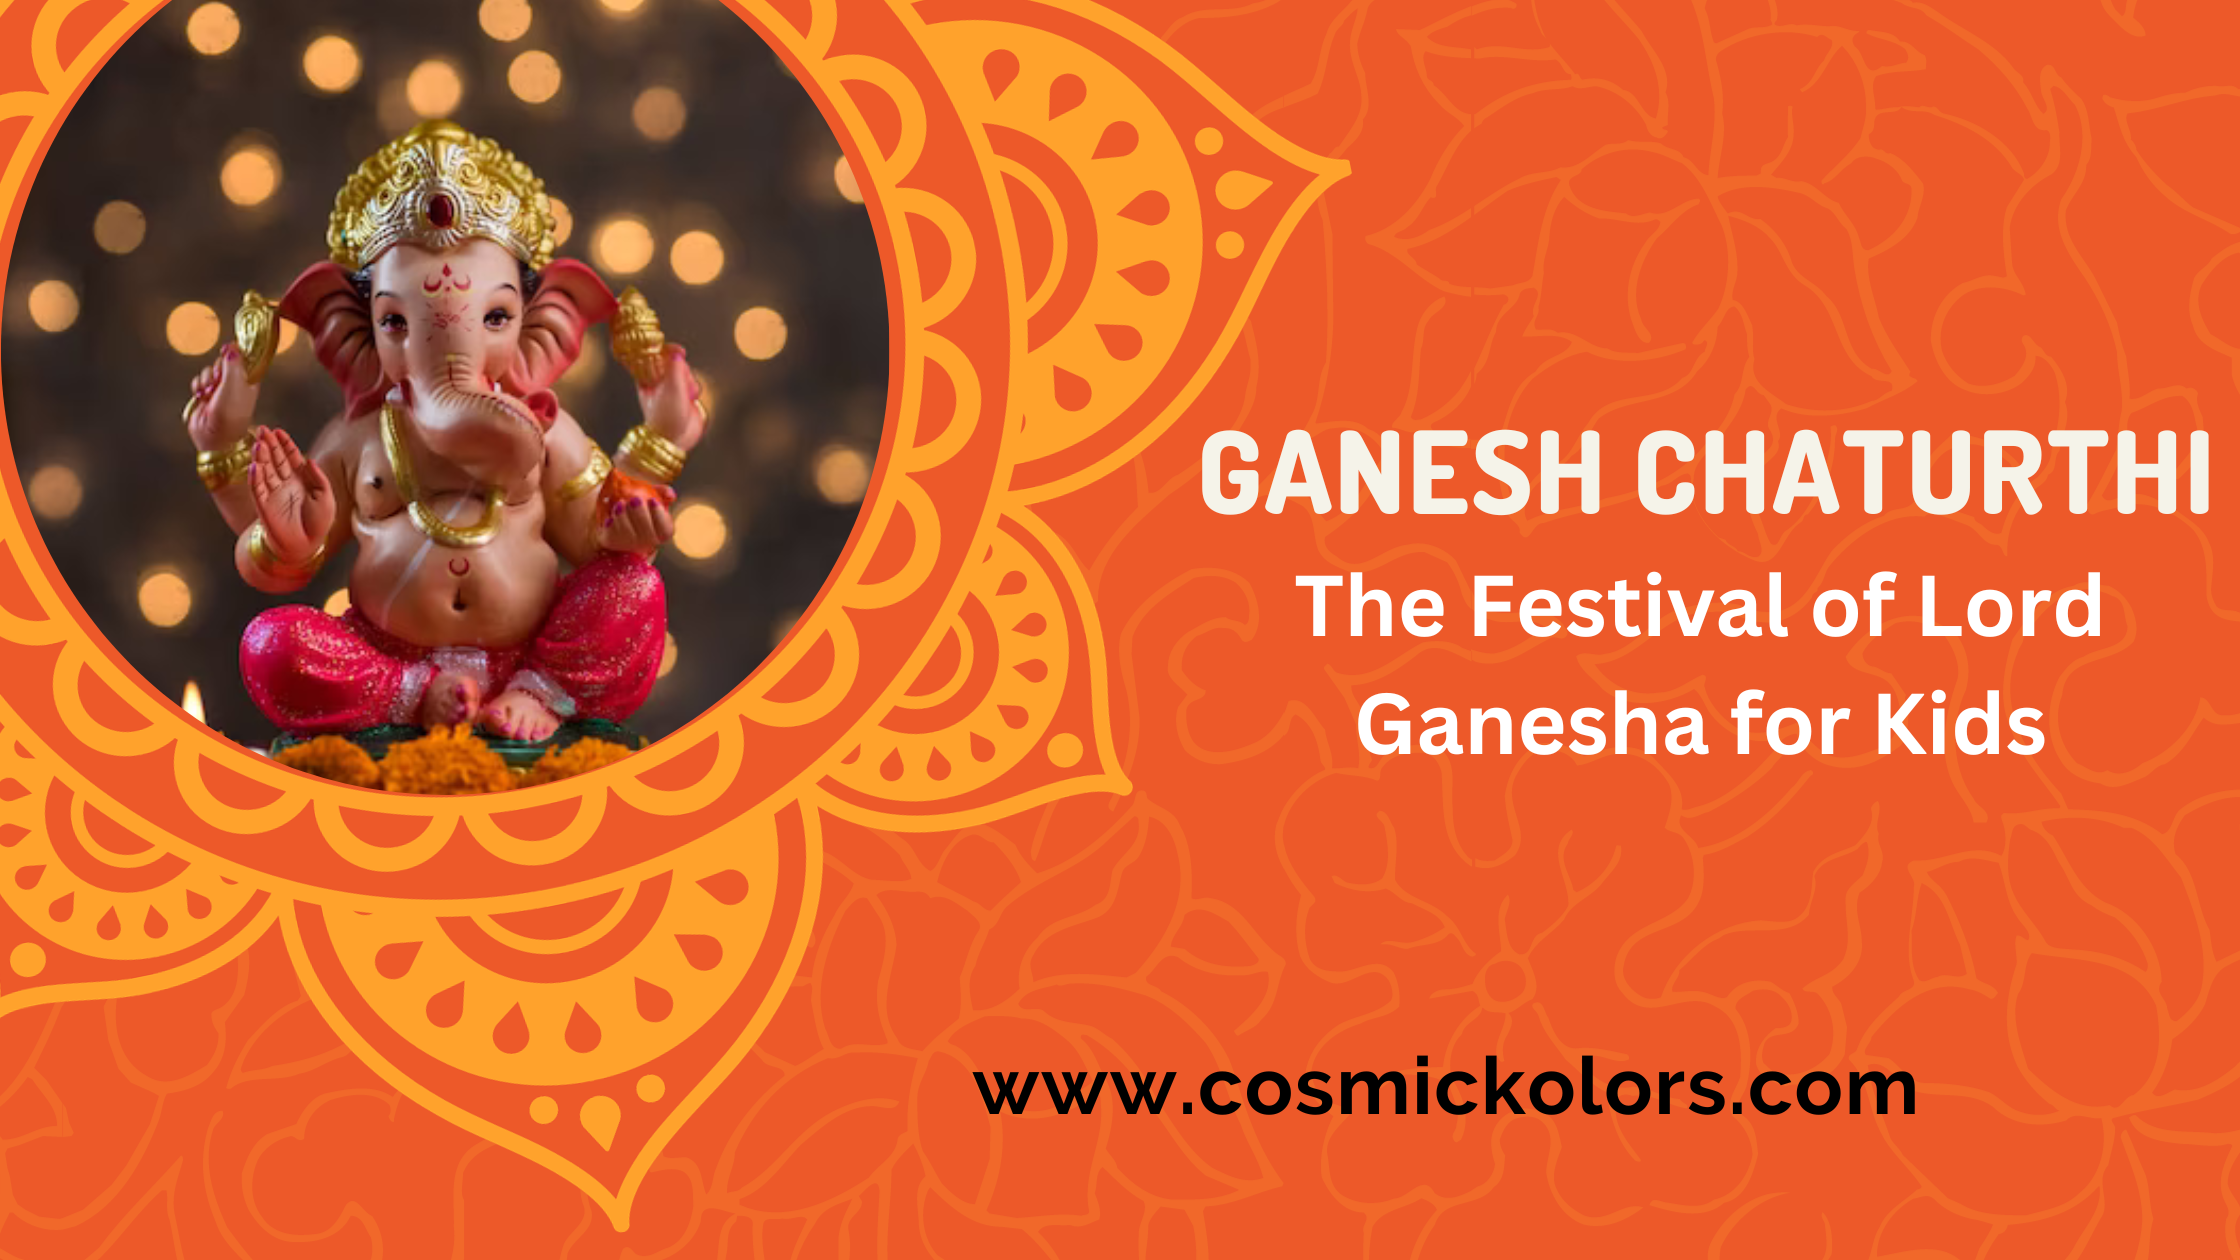 Ganesh Chaturthi: The Festival of Lord Ganesha for Kids